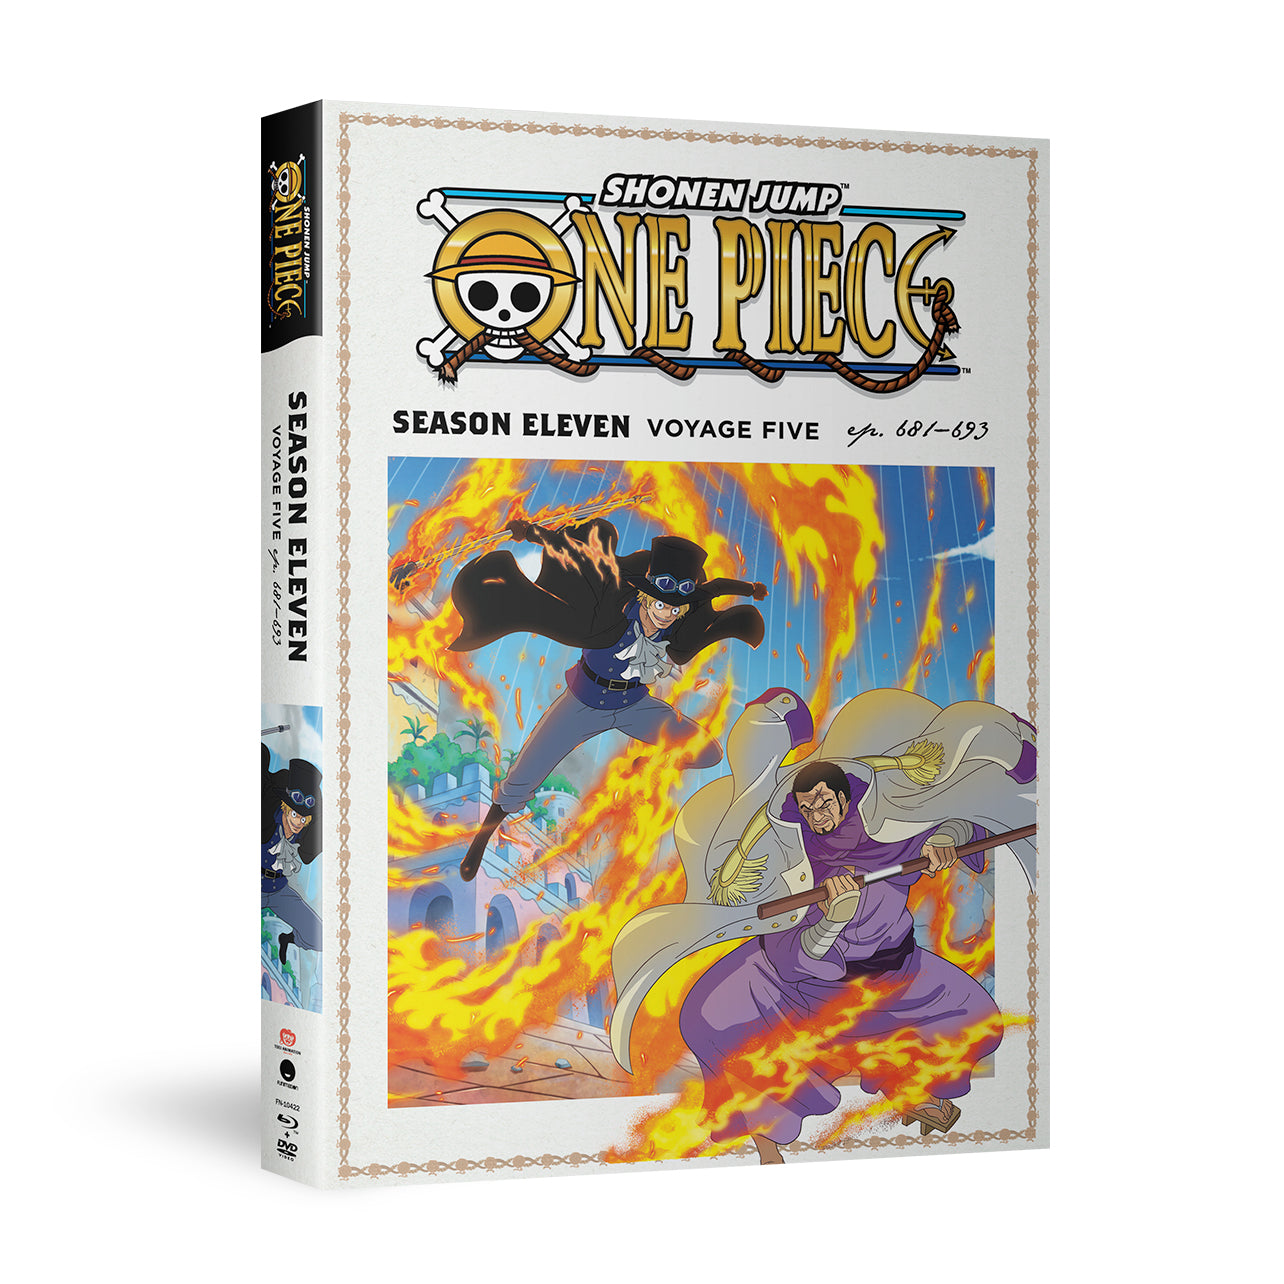 One Piece - Season Eleven Voyage Five - BD/DVD image count 1